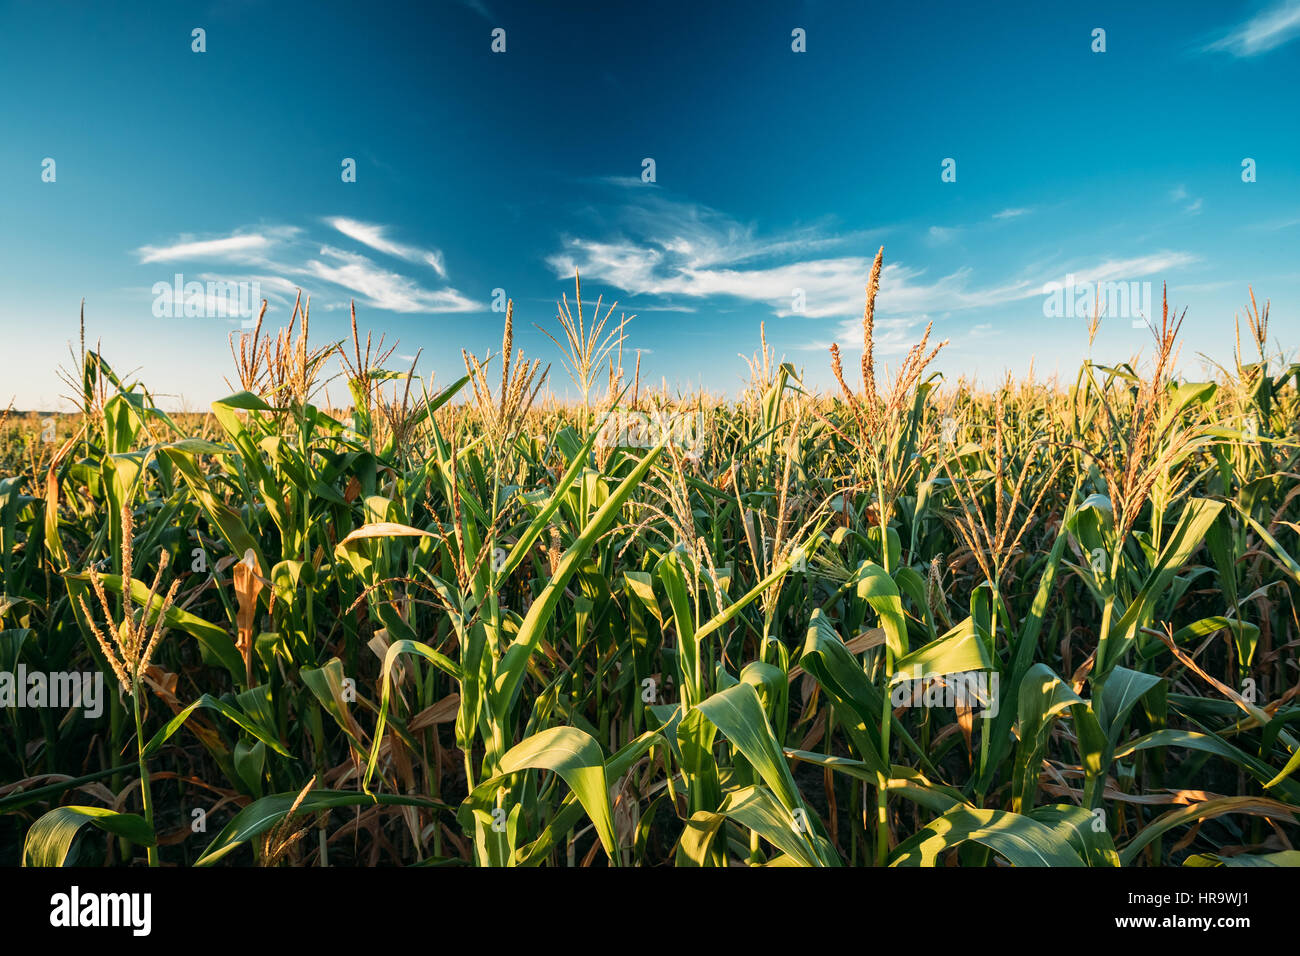 Plantación de maíz verde campo de maíz en verano temporada agrícola. Horizonte horizonte, el cielo azul de fondo. Foto de stock